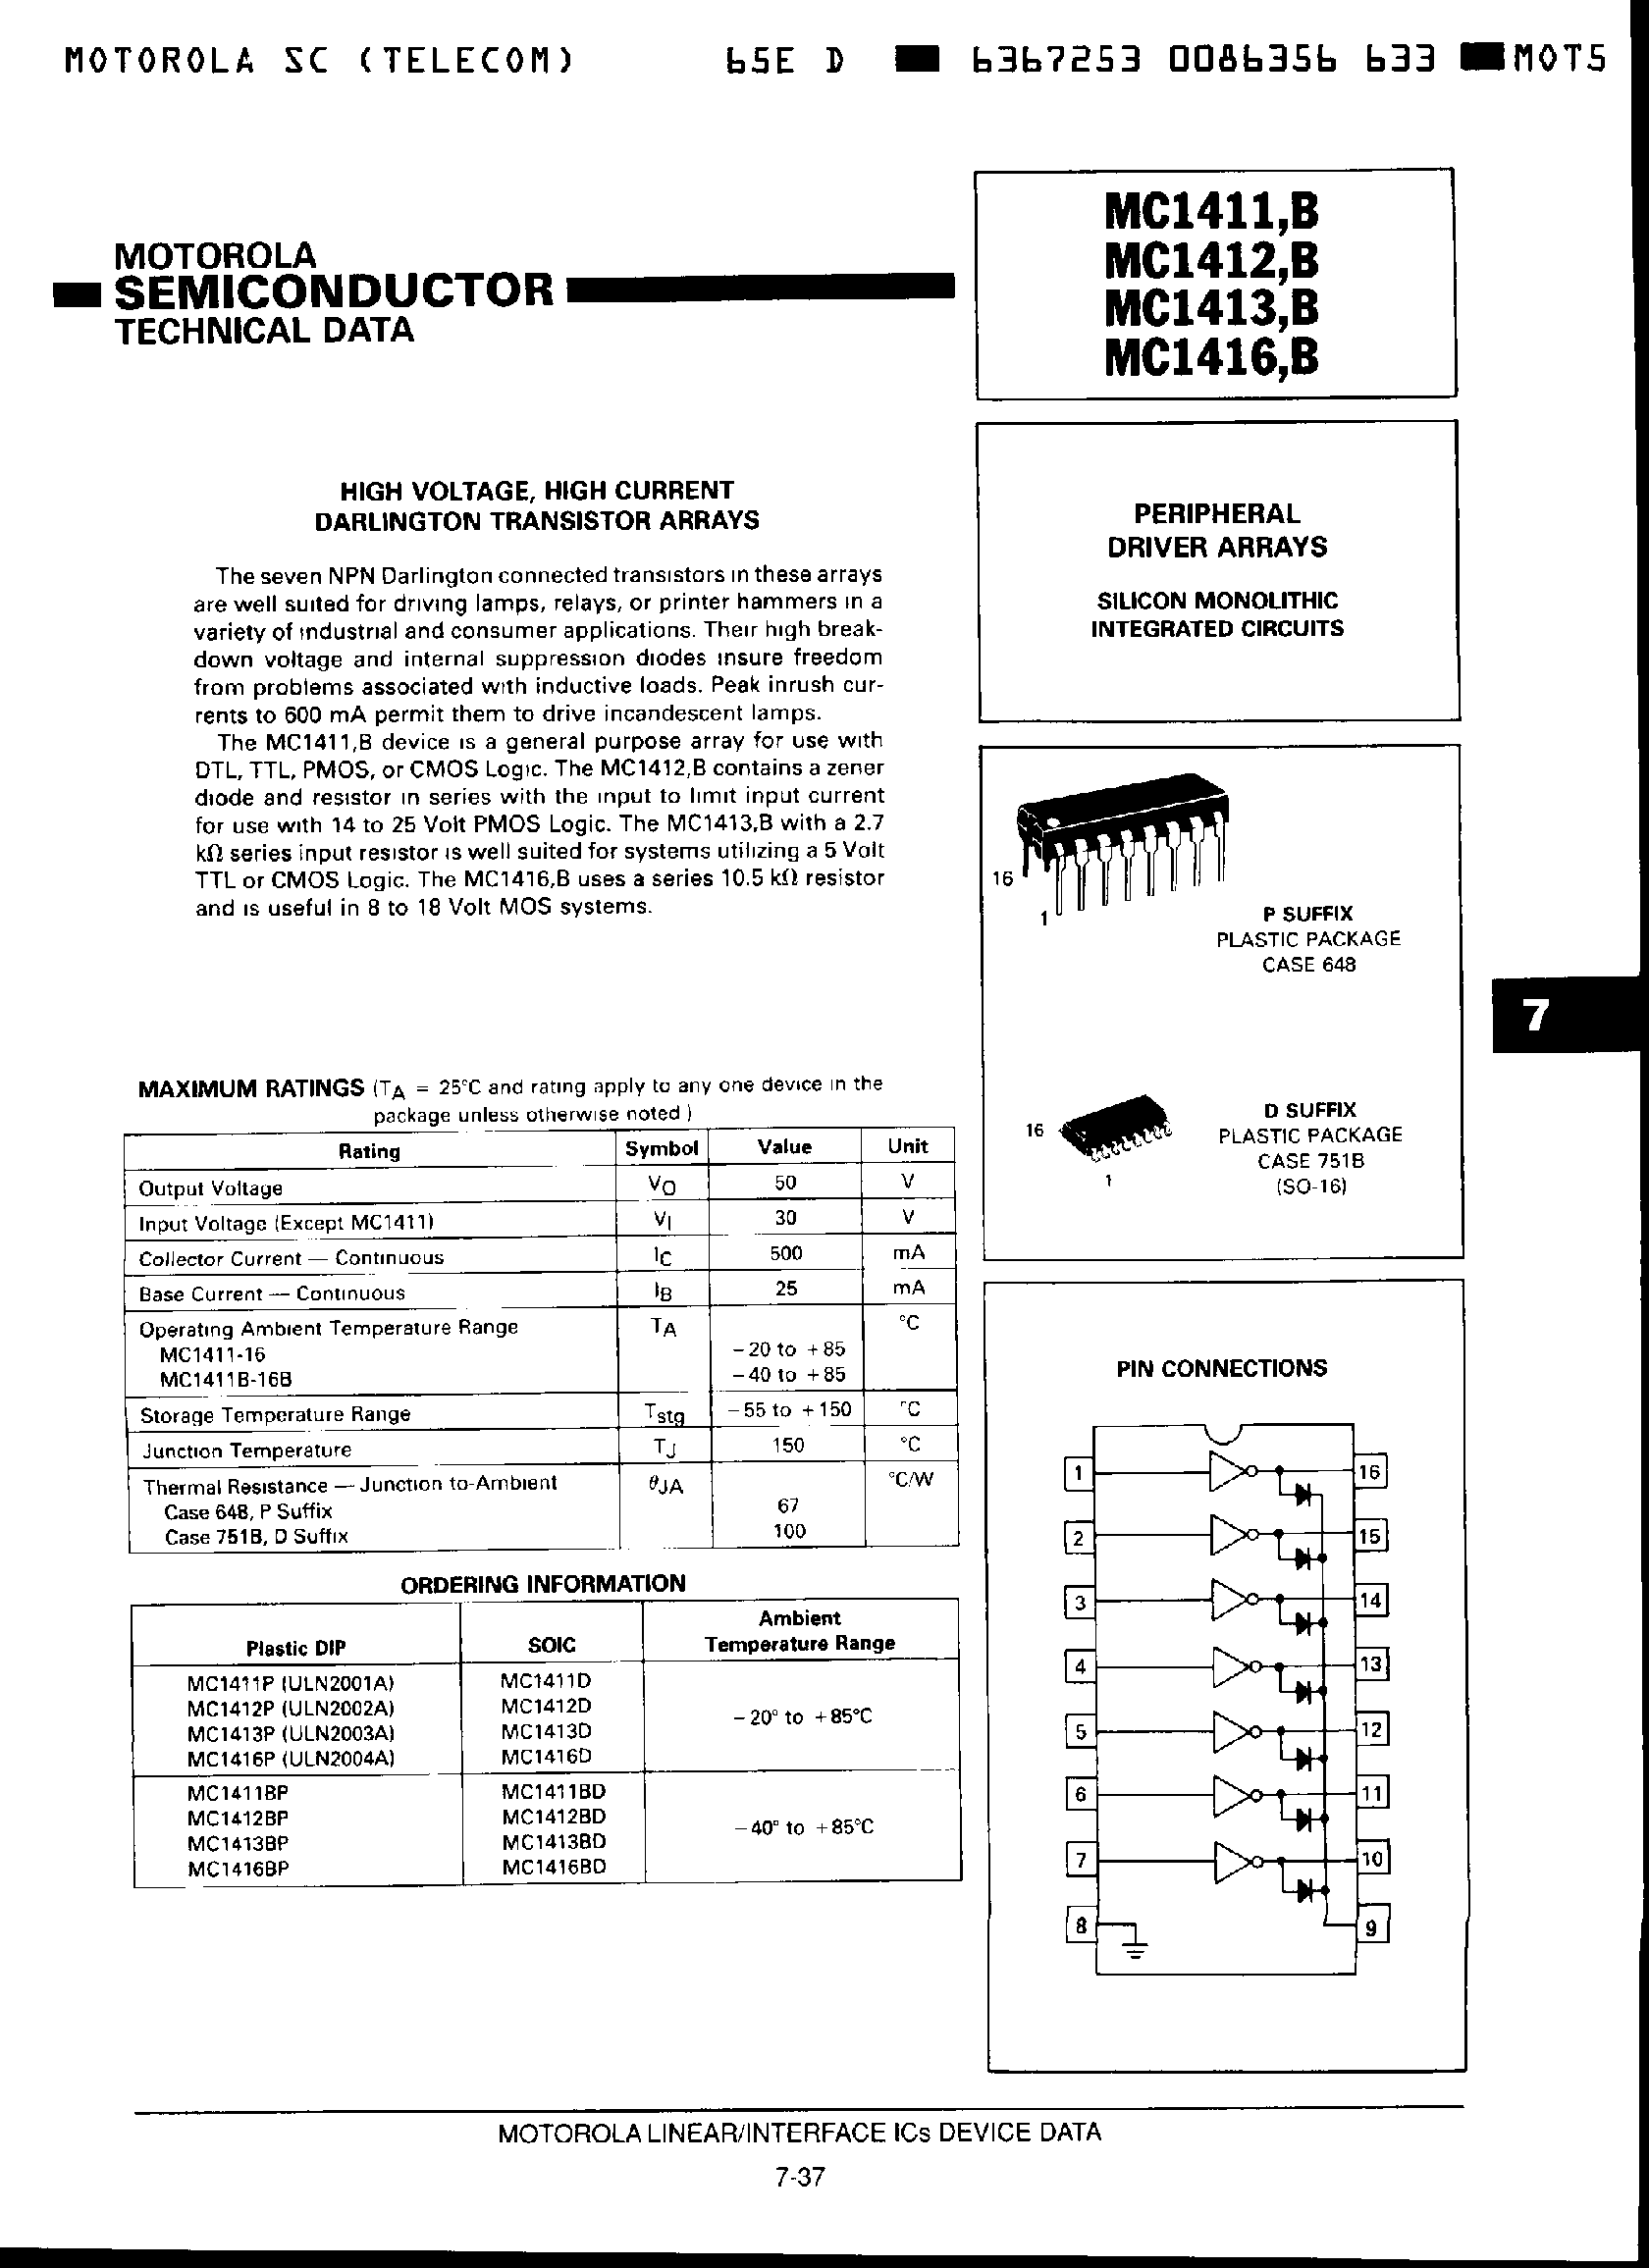 Datasheet MC1416BD - PERIPHERAL DRIVER ARRAYS page 1